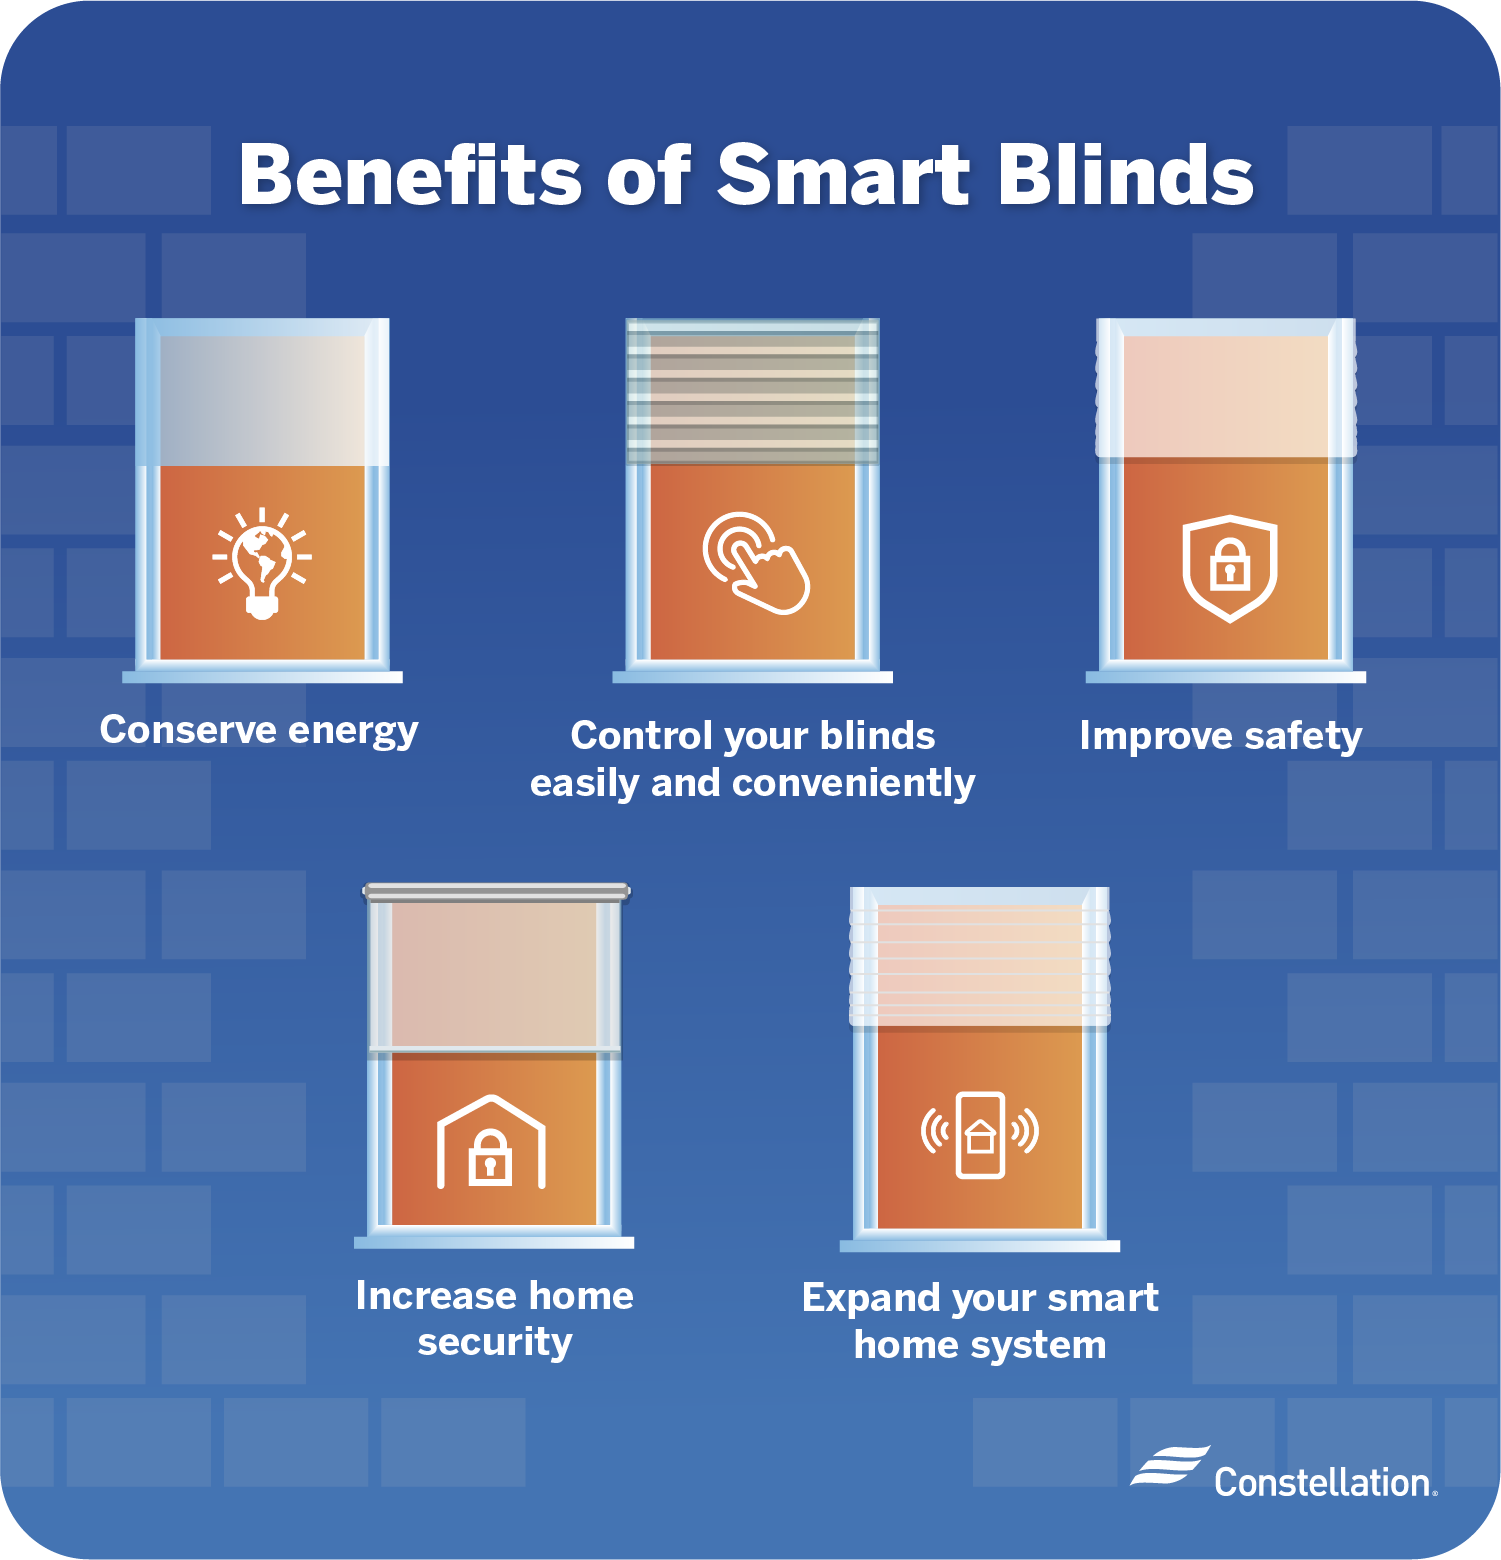 Benefits of smart blinds.